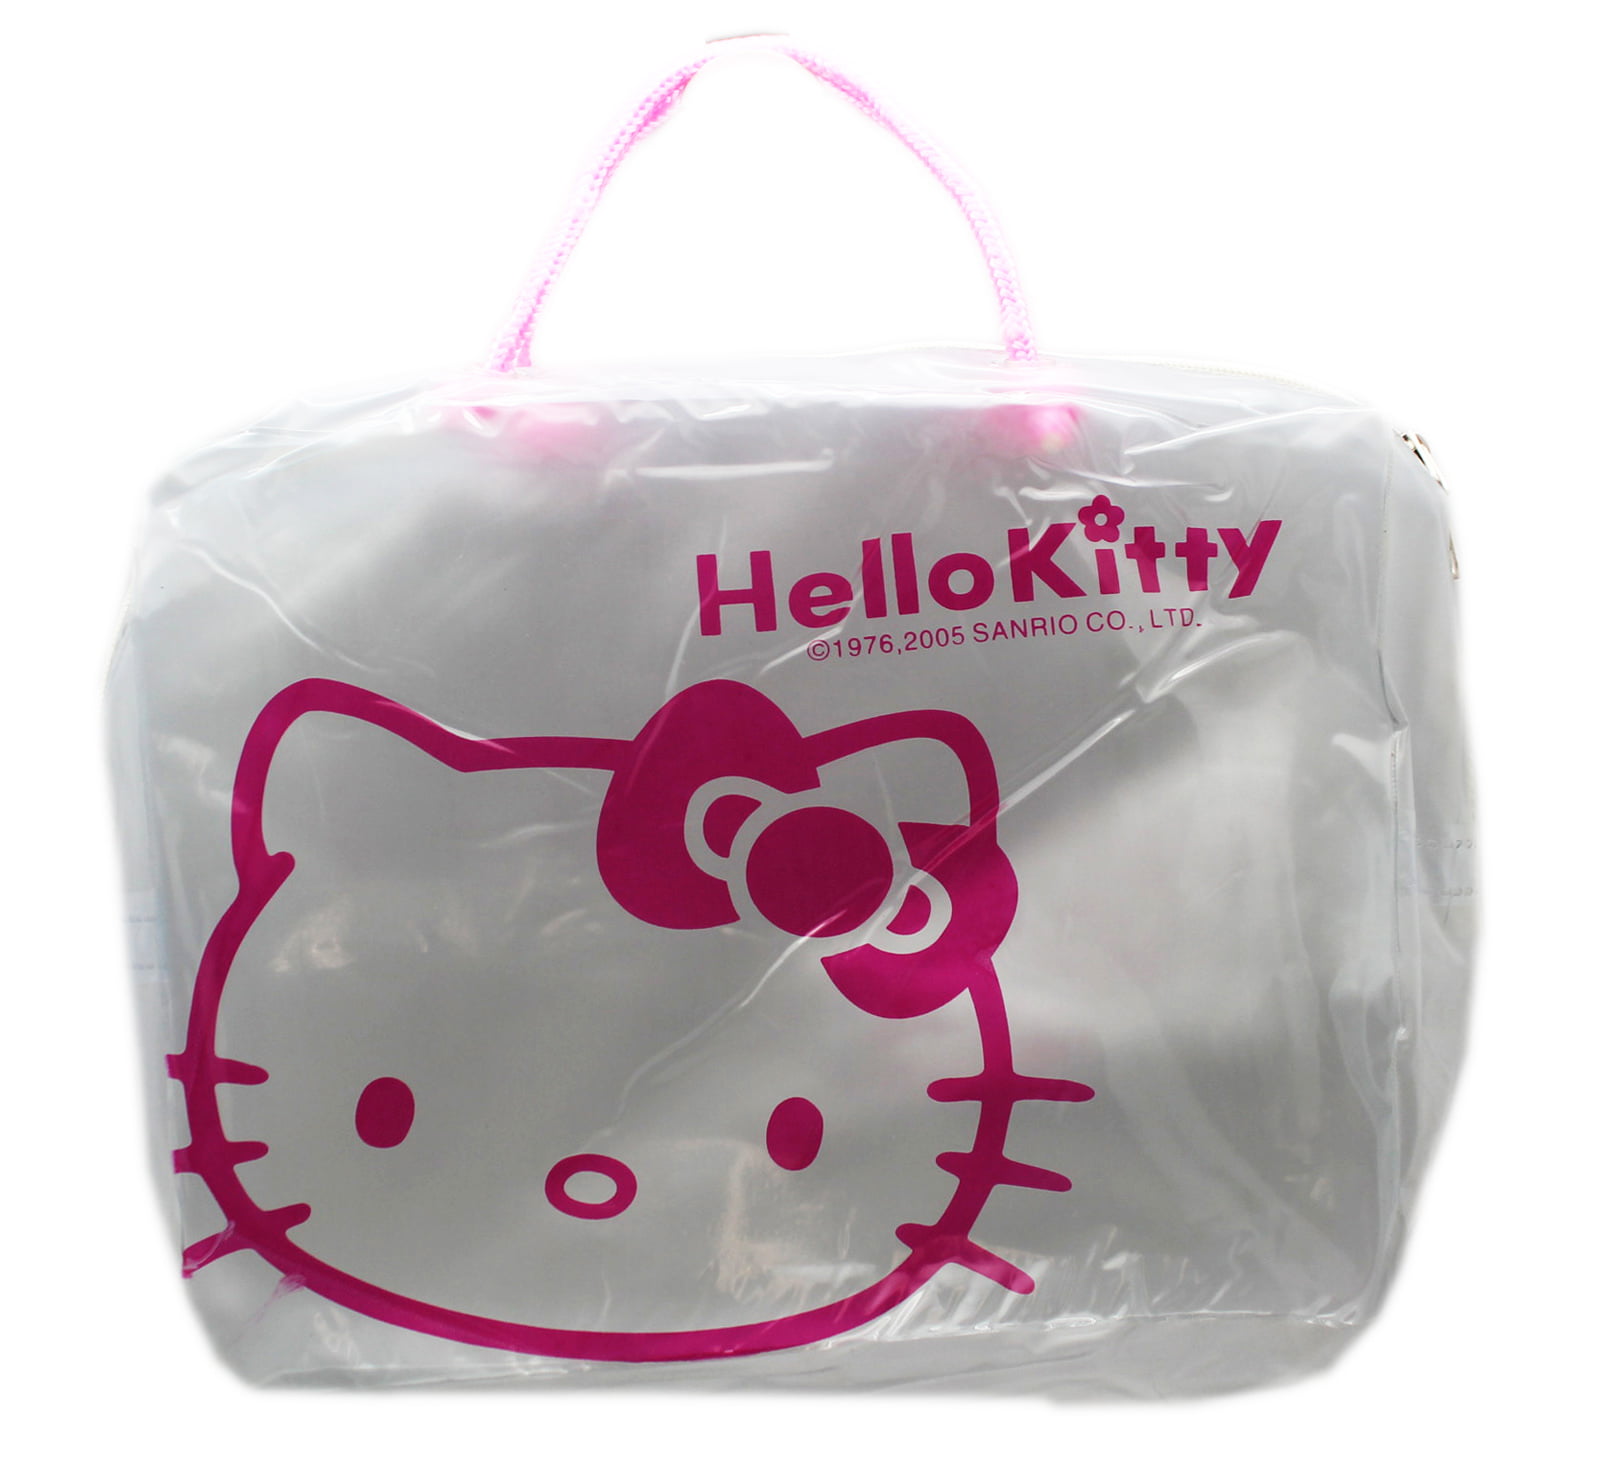 Sanrio Hello Kitty Plastic Bag With Ties Pink Hearts 